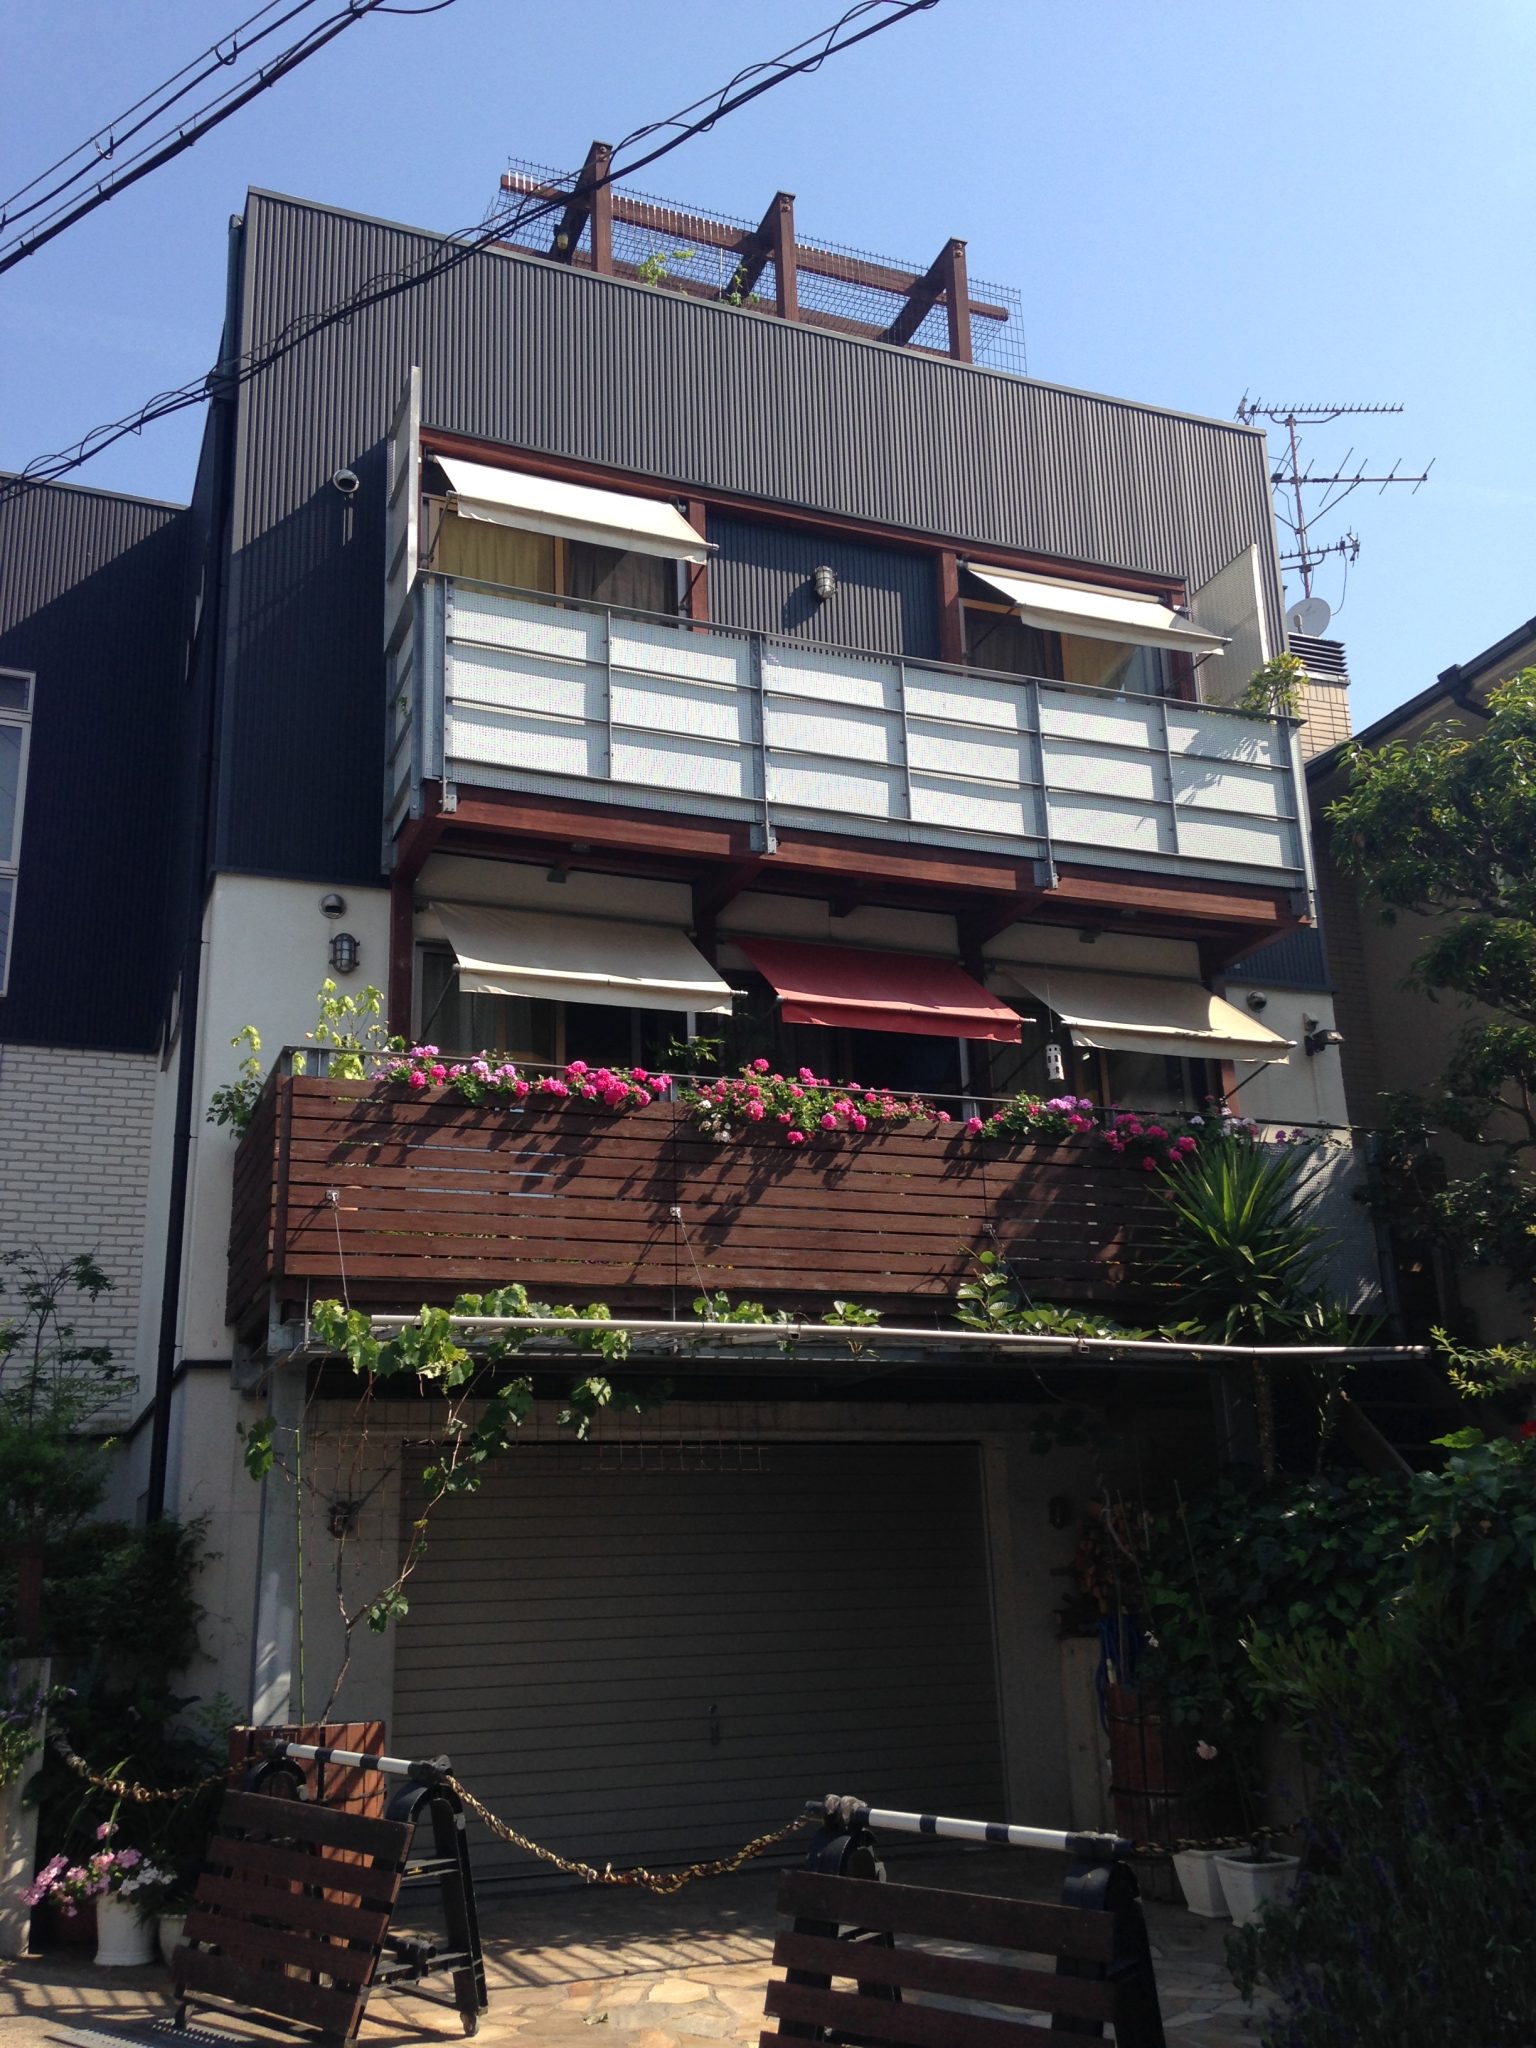 A modern Japanese house in Kobe, Japan